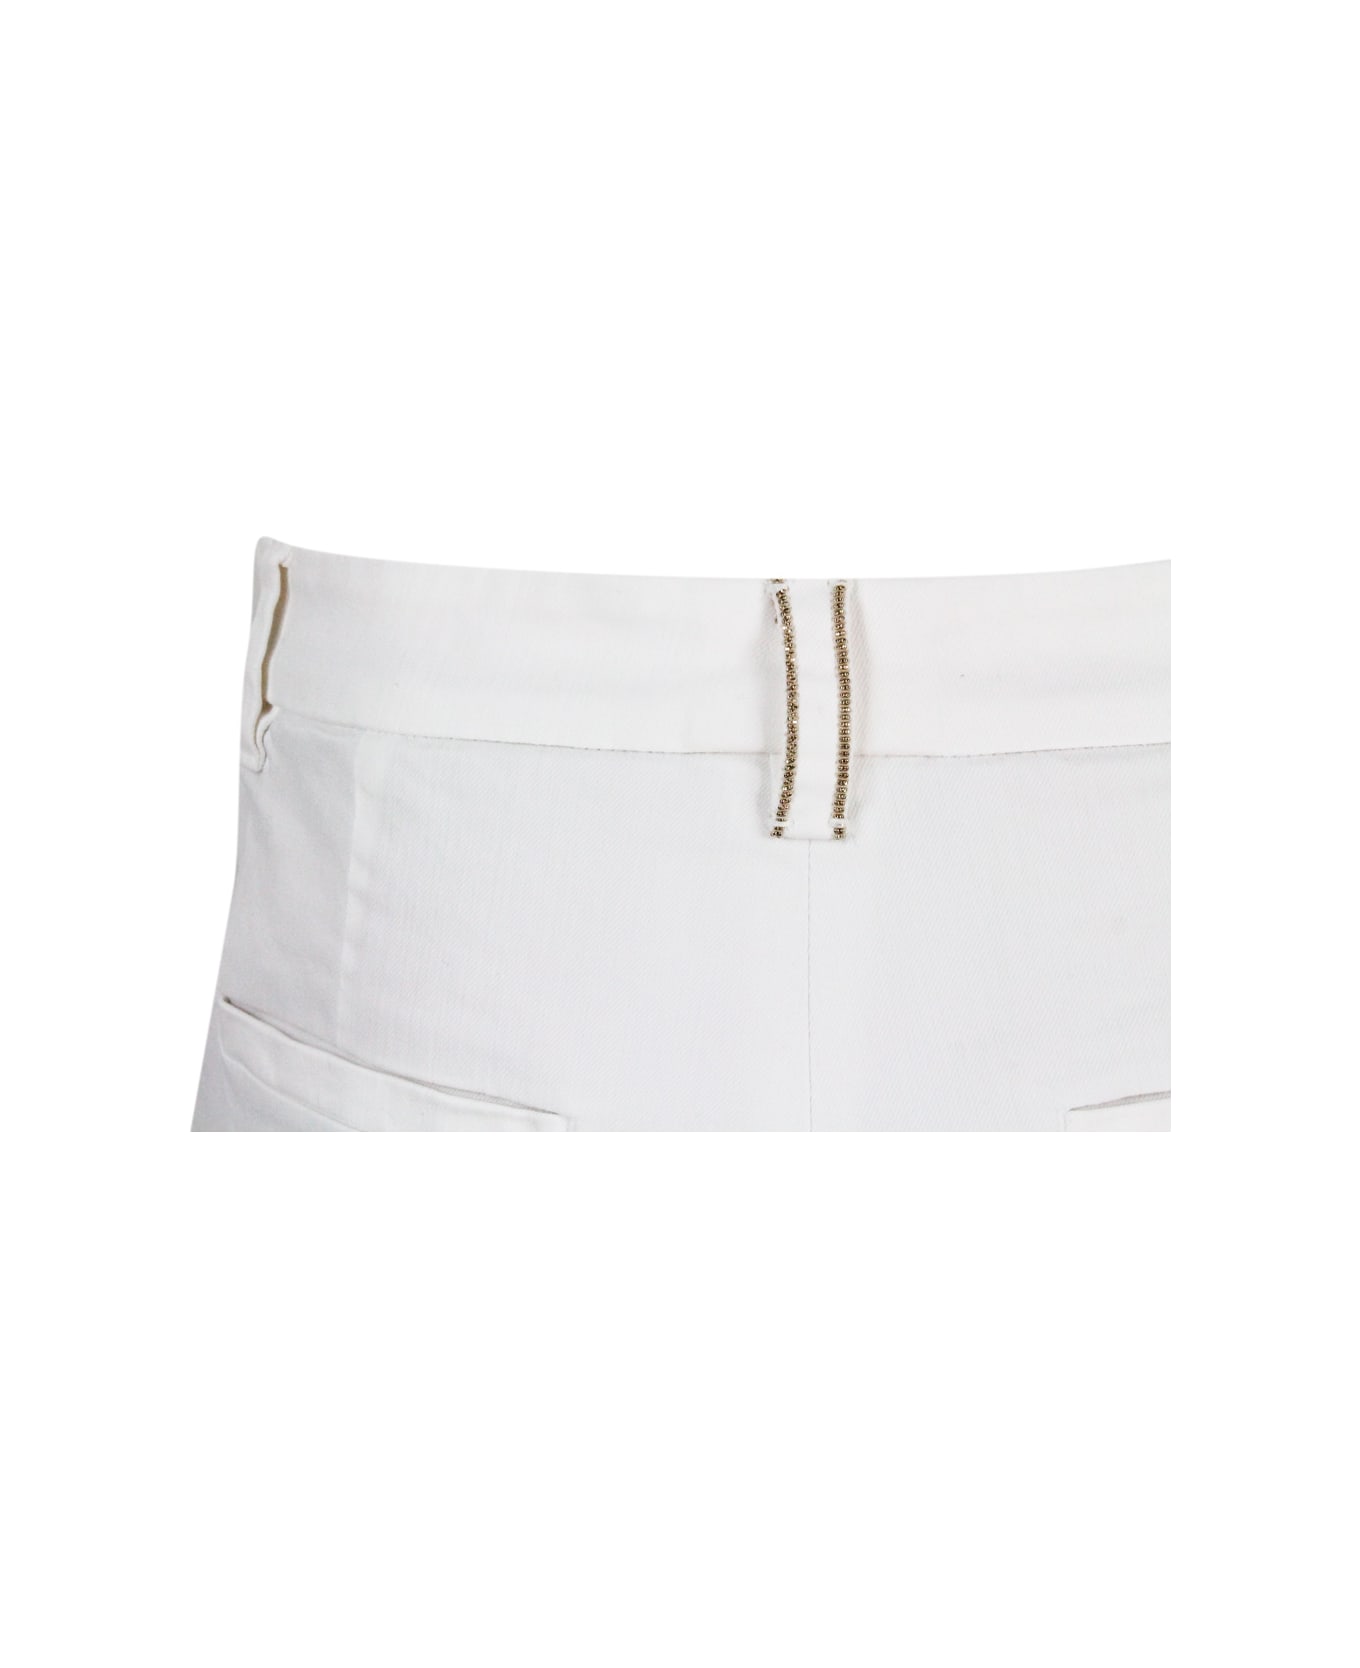 Brunello Cucinelli Garment-dyed Stretch Cotton Drill Cigarette Trousers - White ボトムス